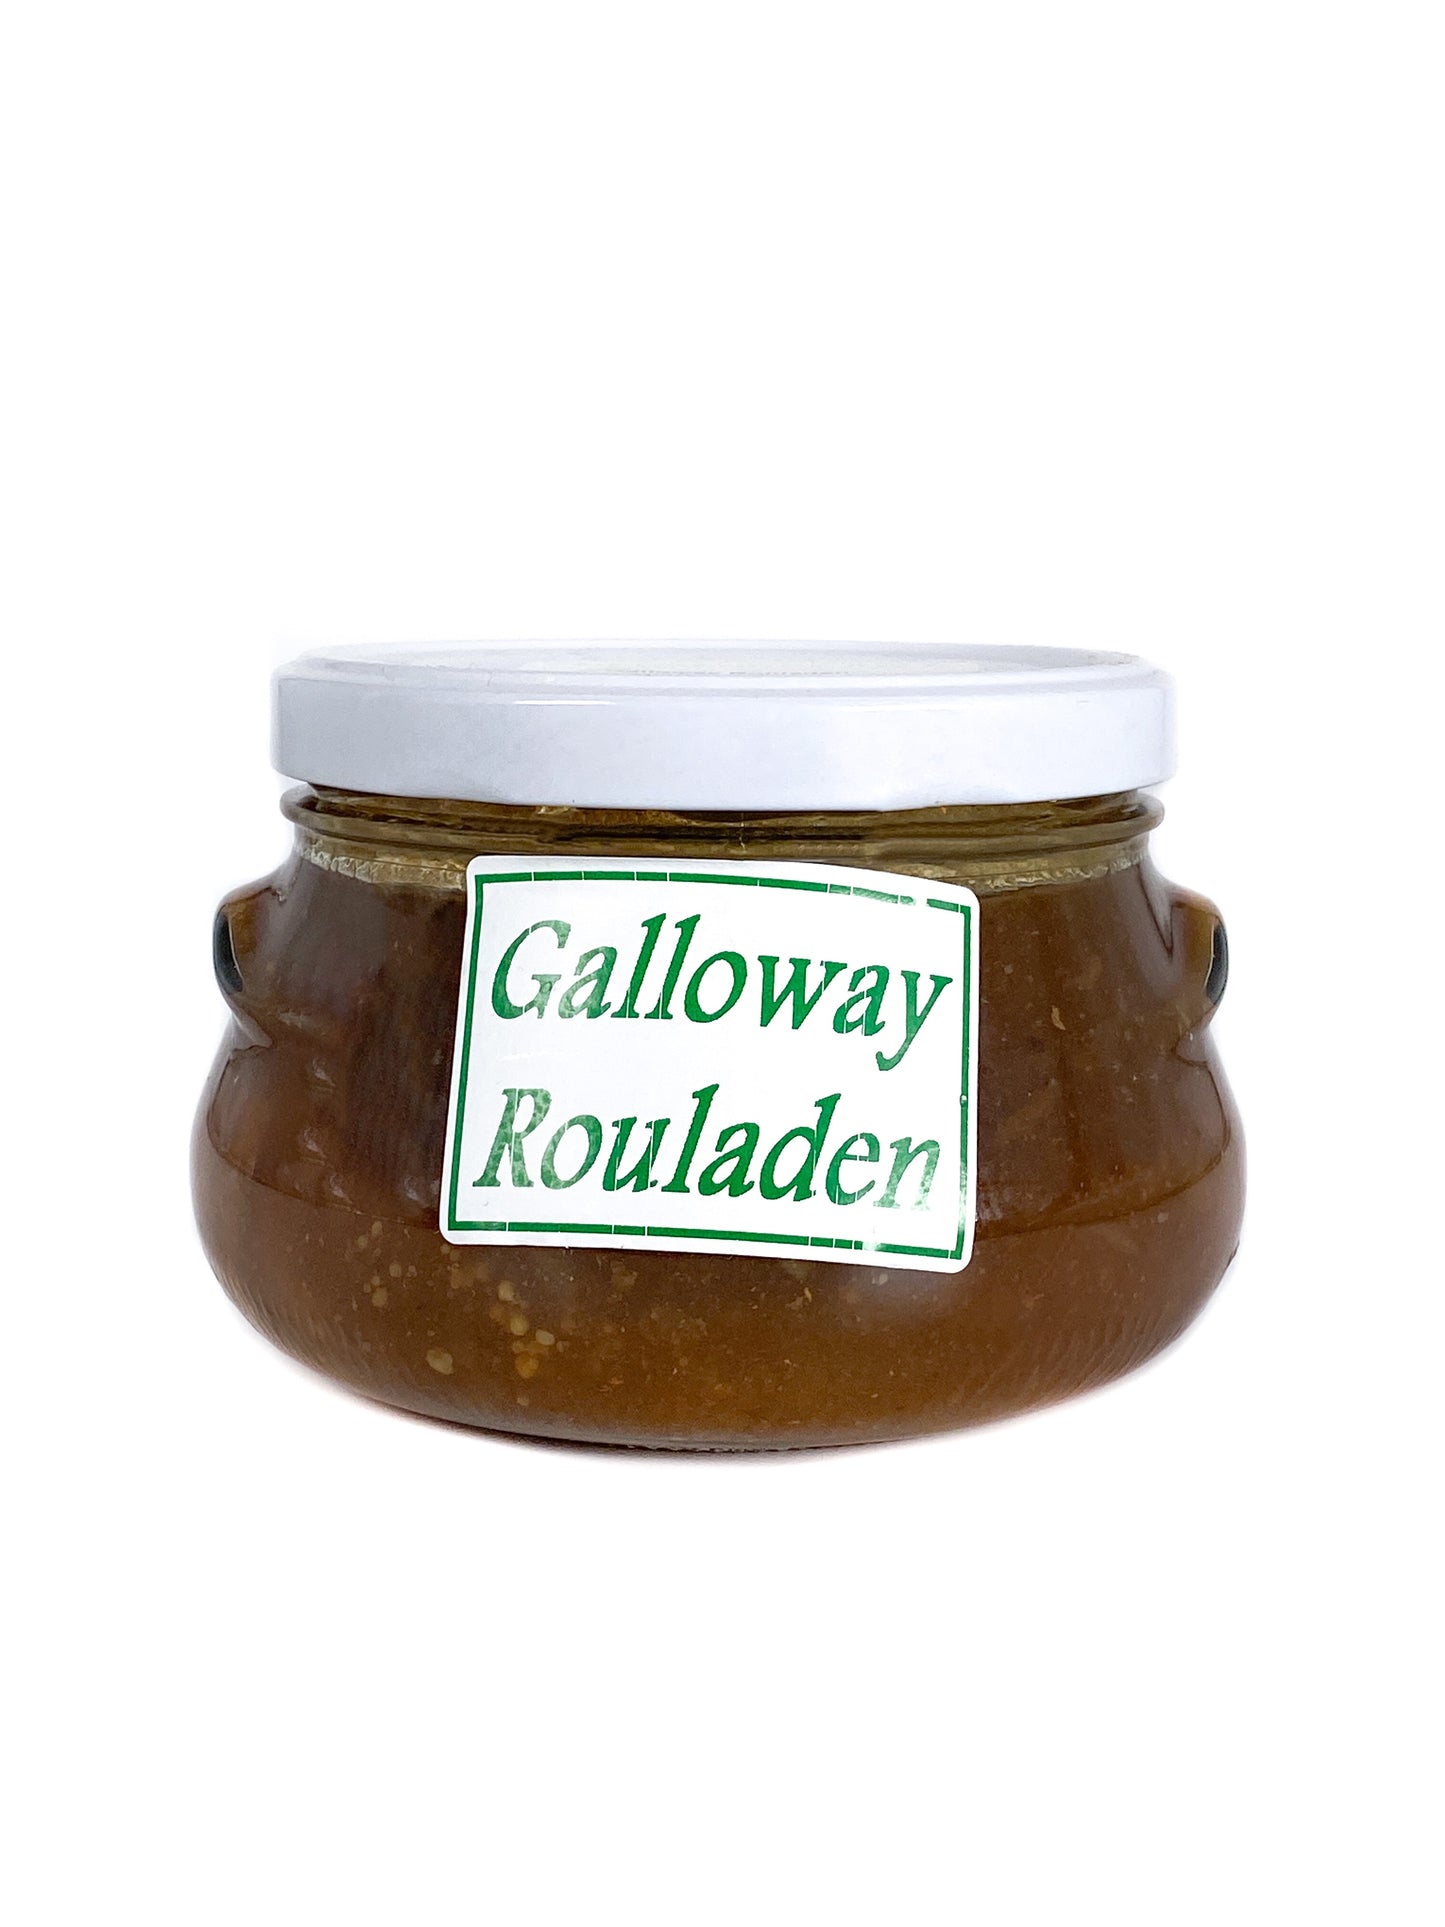 Galloway Rouladen